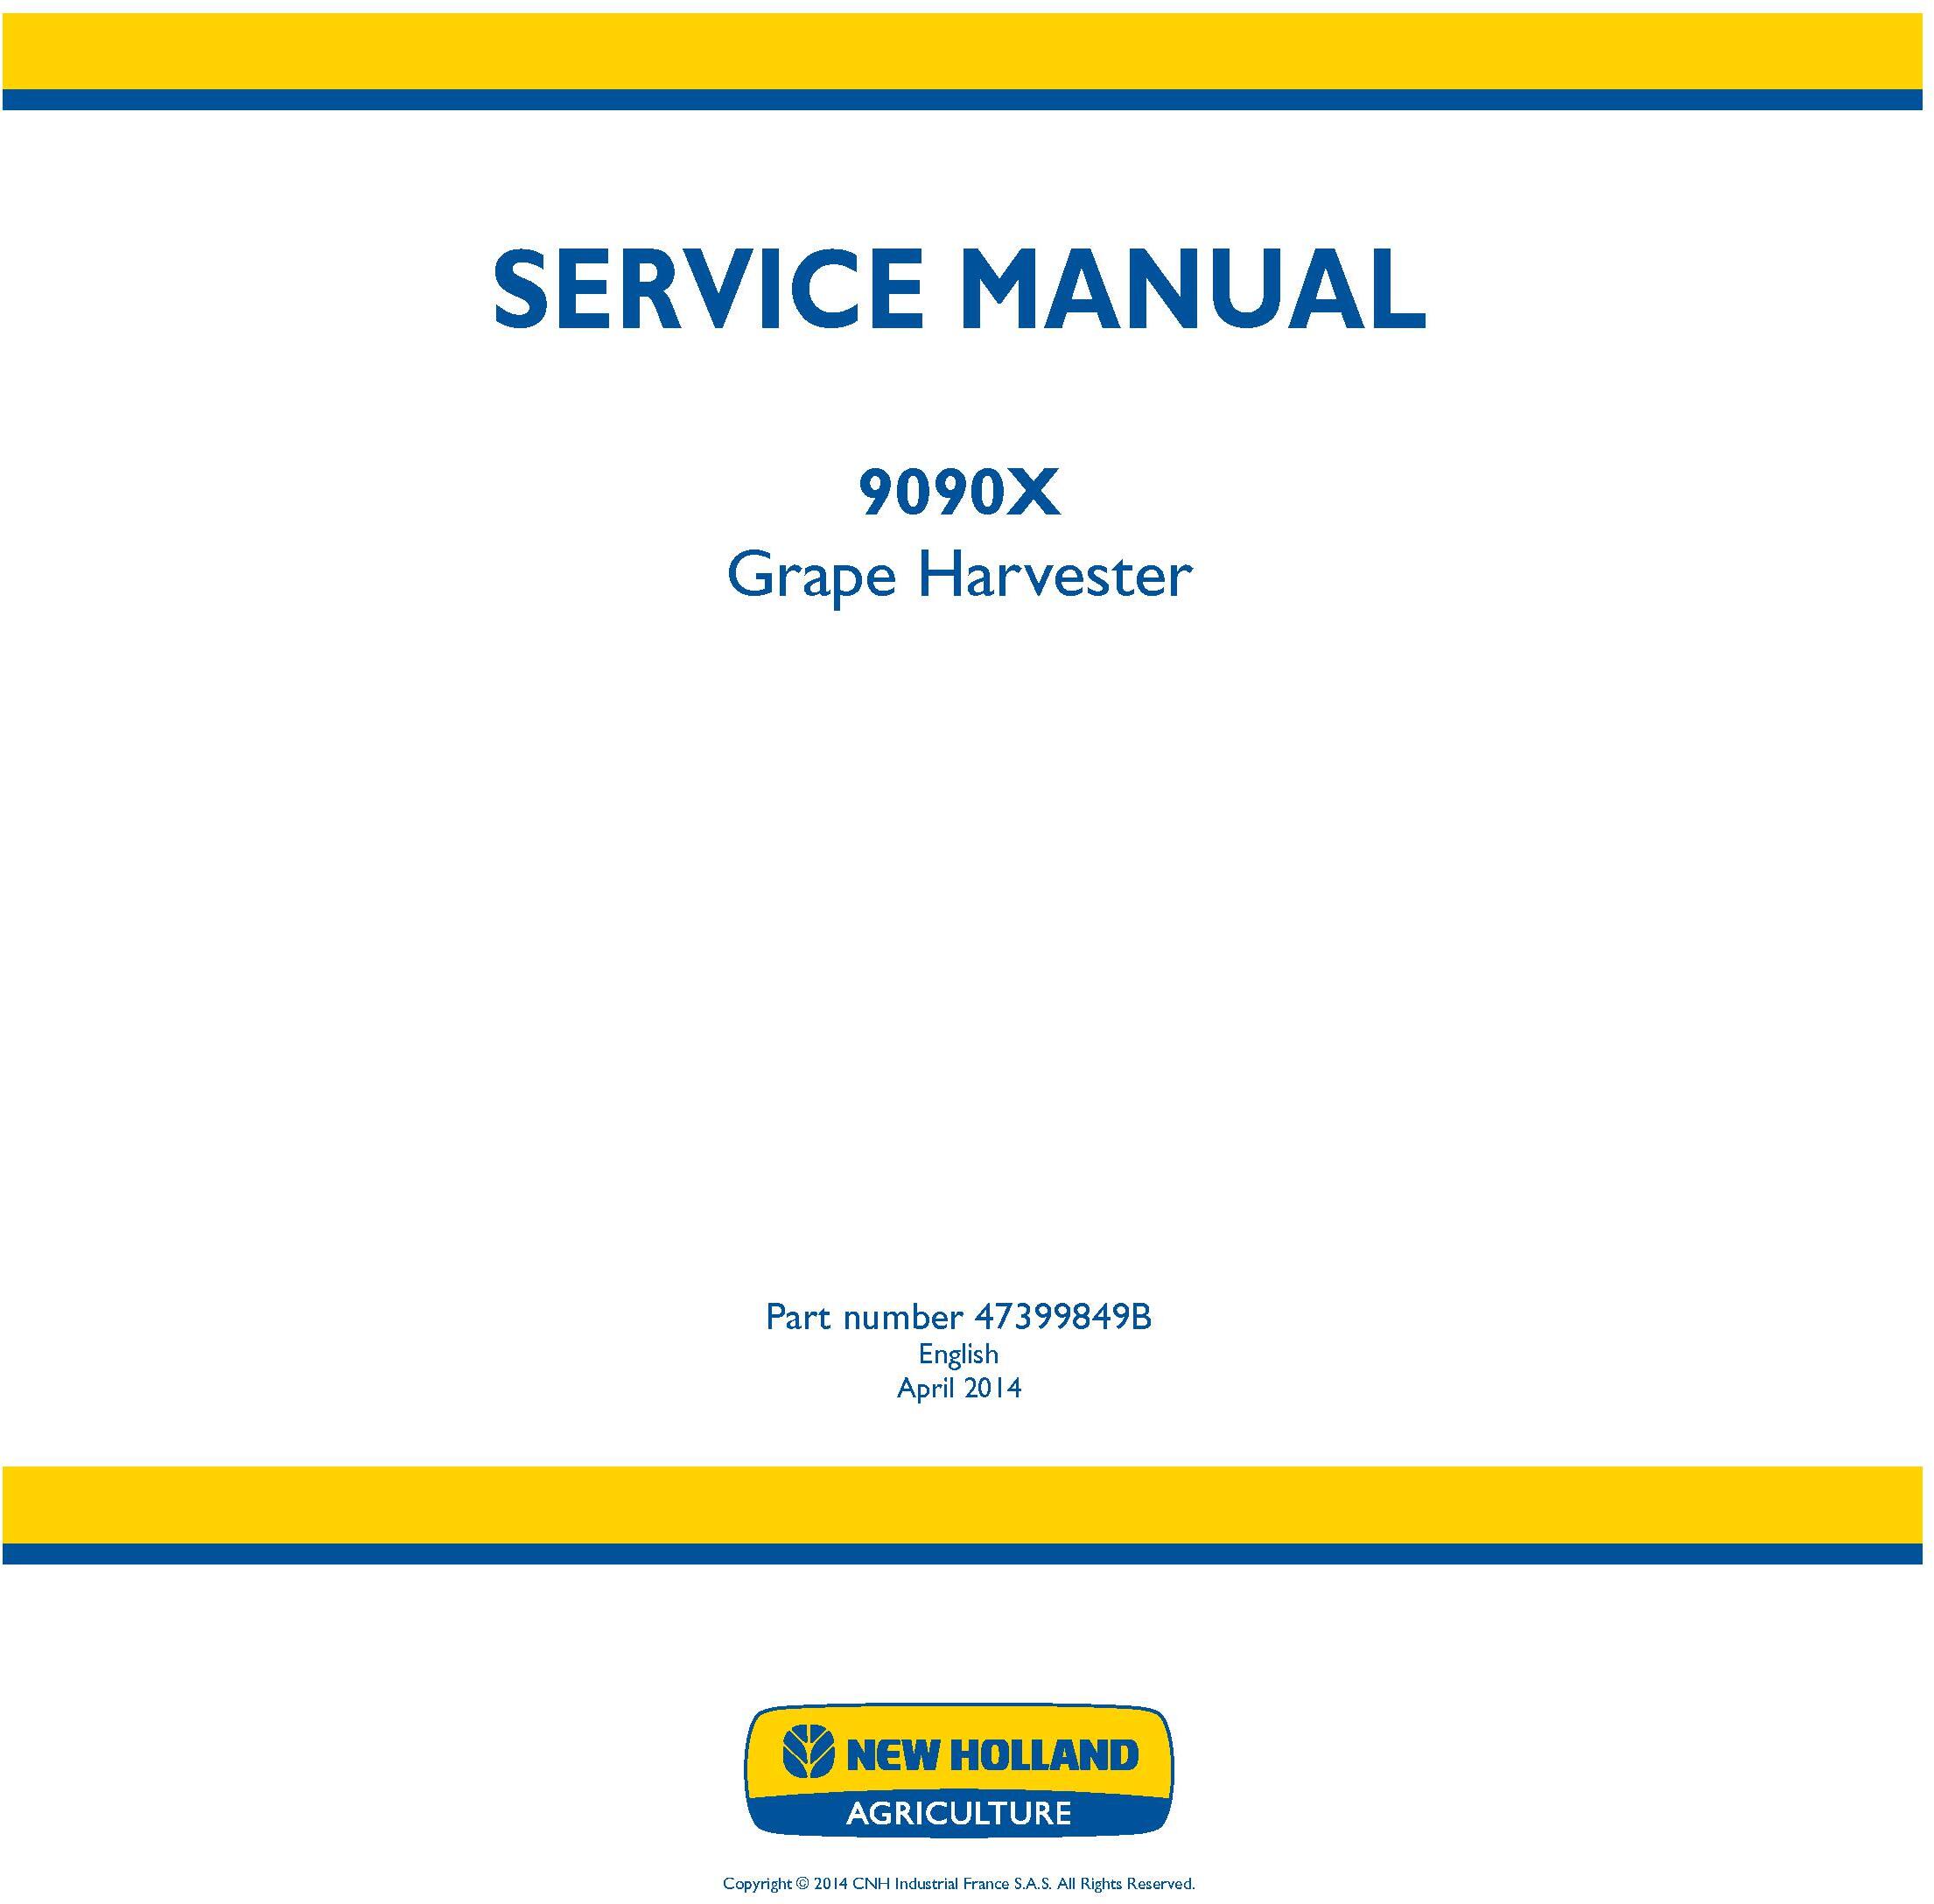 New Holland 9090X Grape Harvester Service Manual - 19366